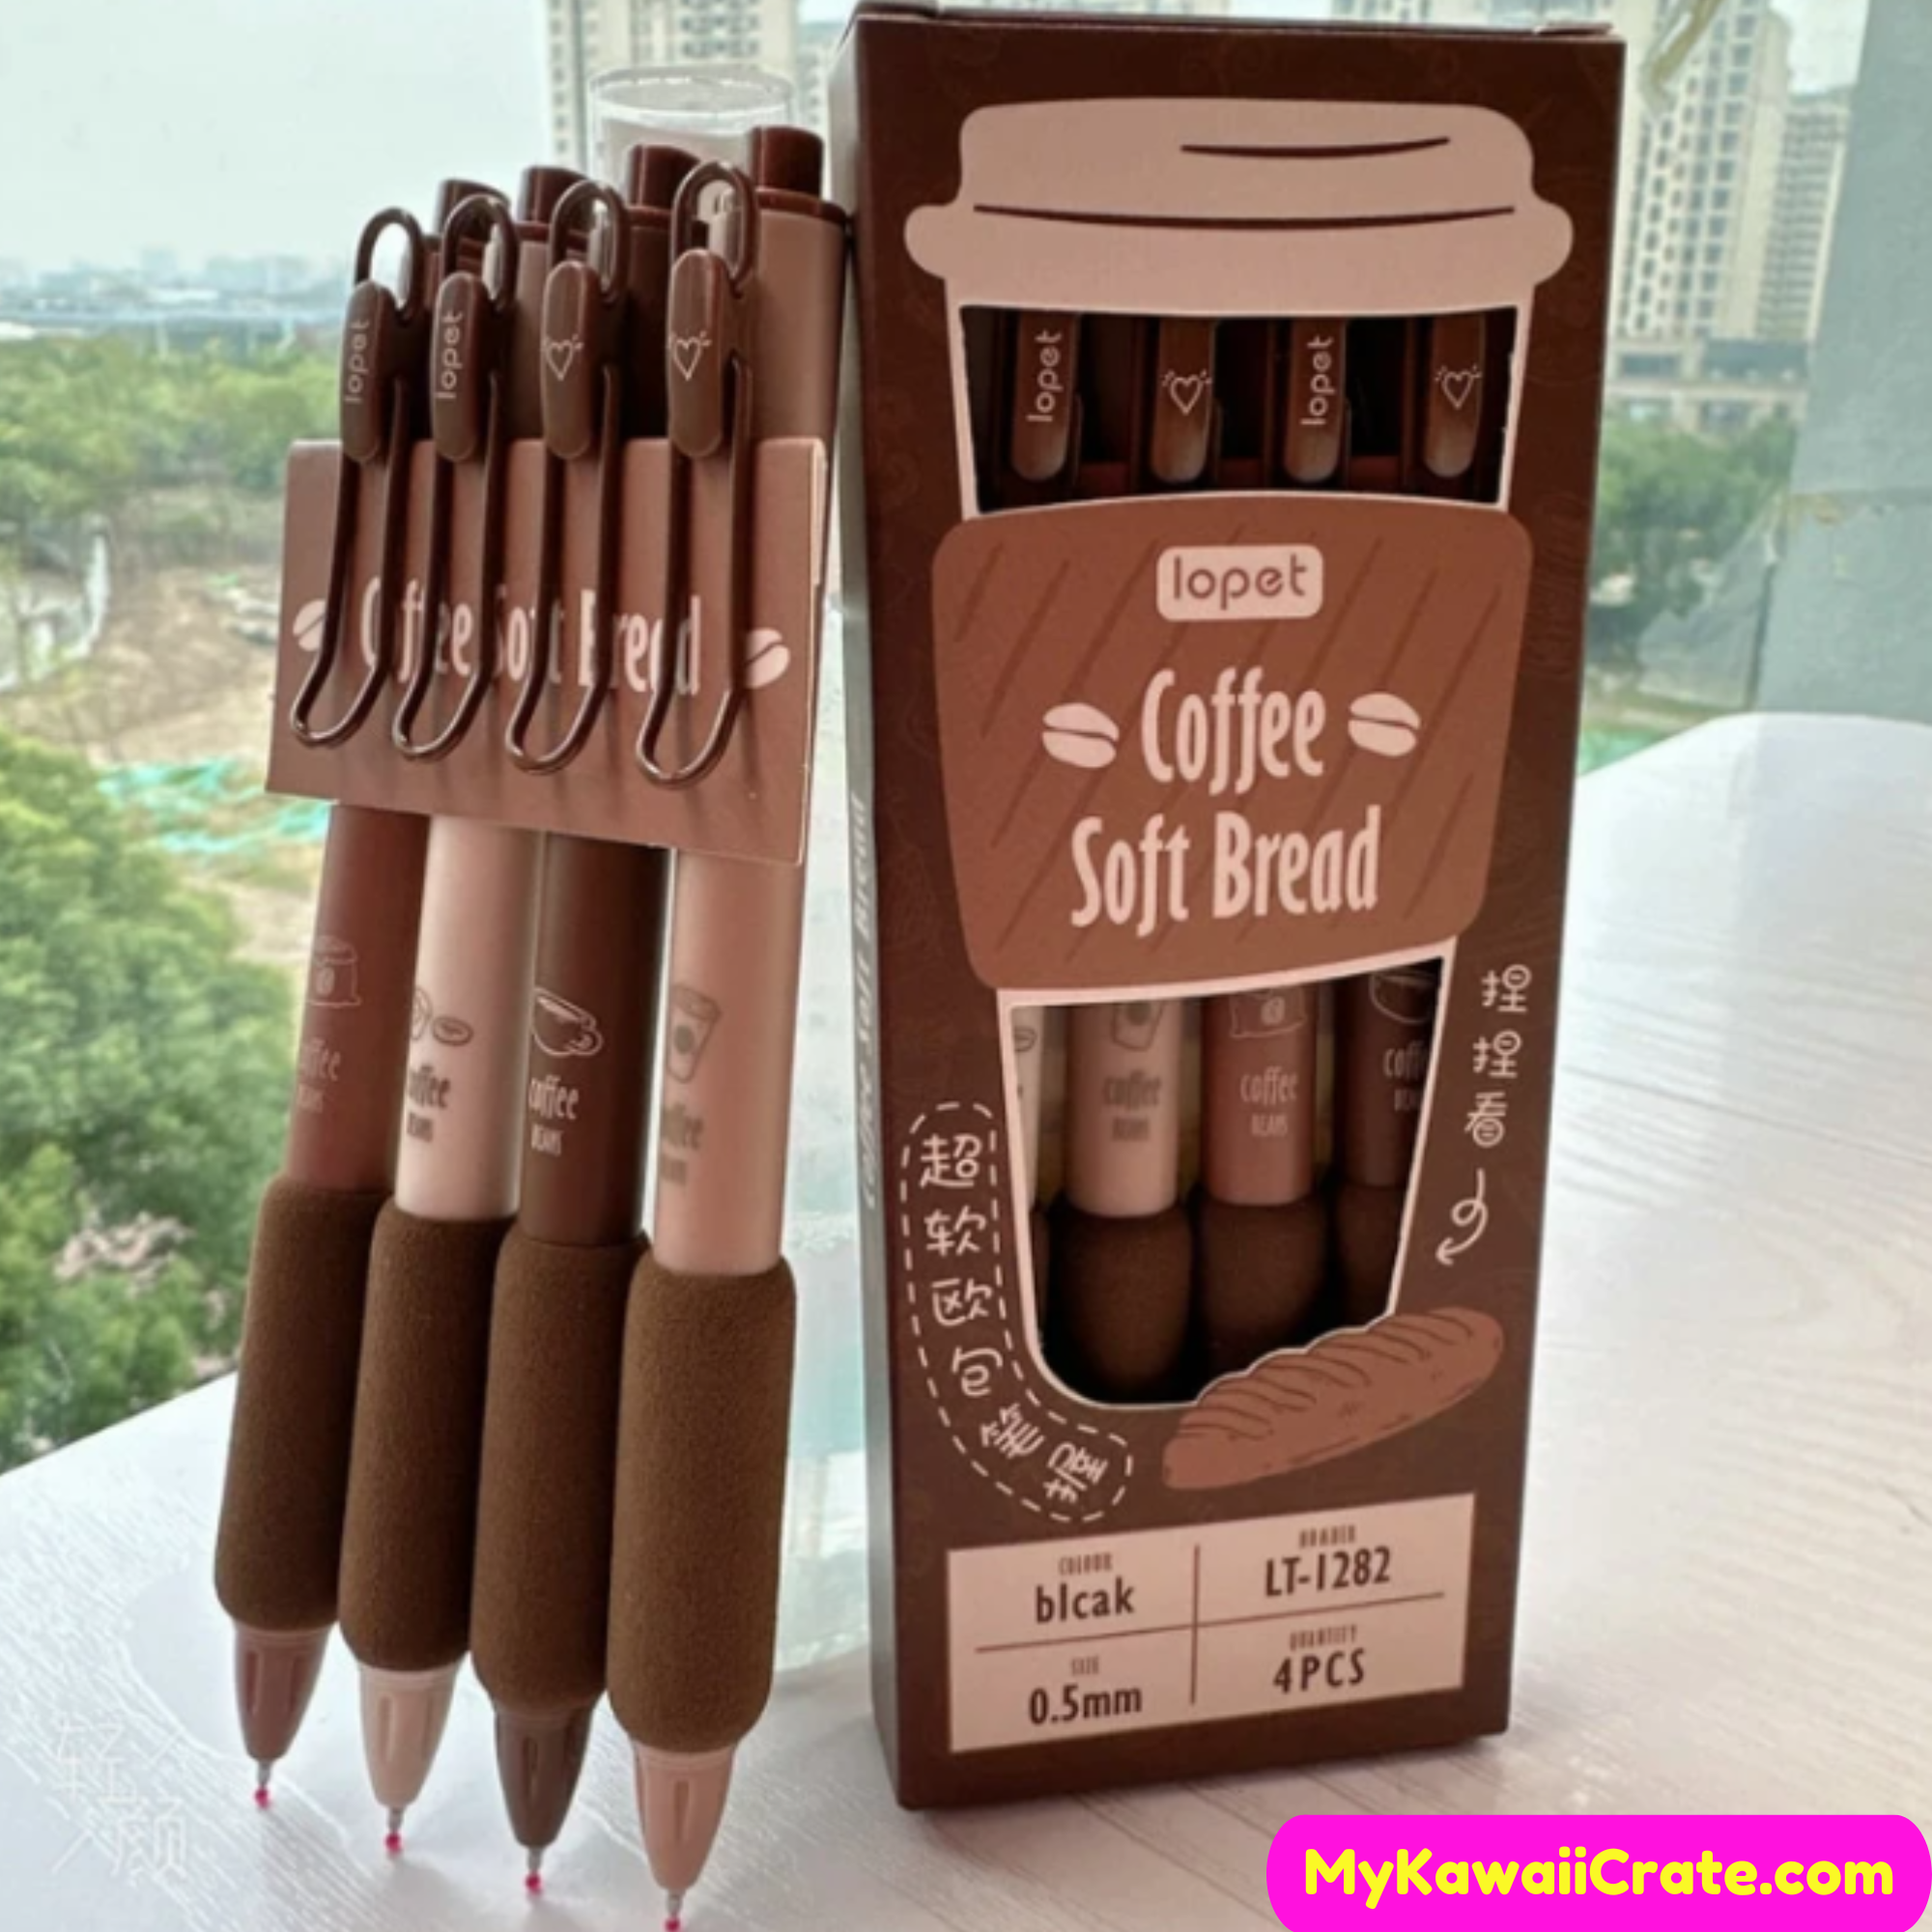 PAPERWRLD - Coffee Time Gel Pens Set & Coffee Marker